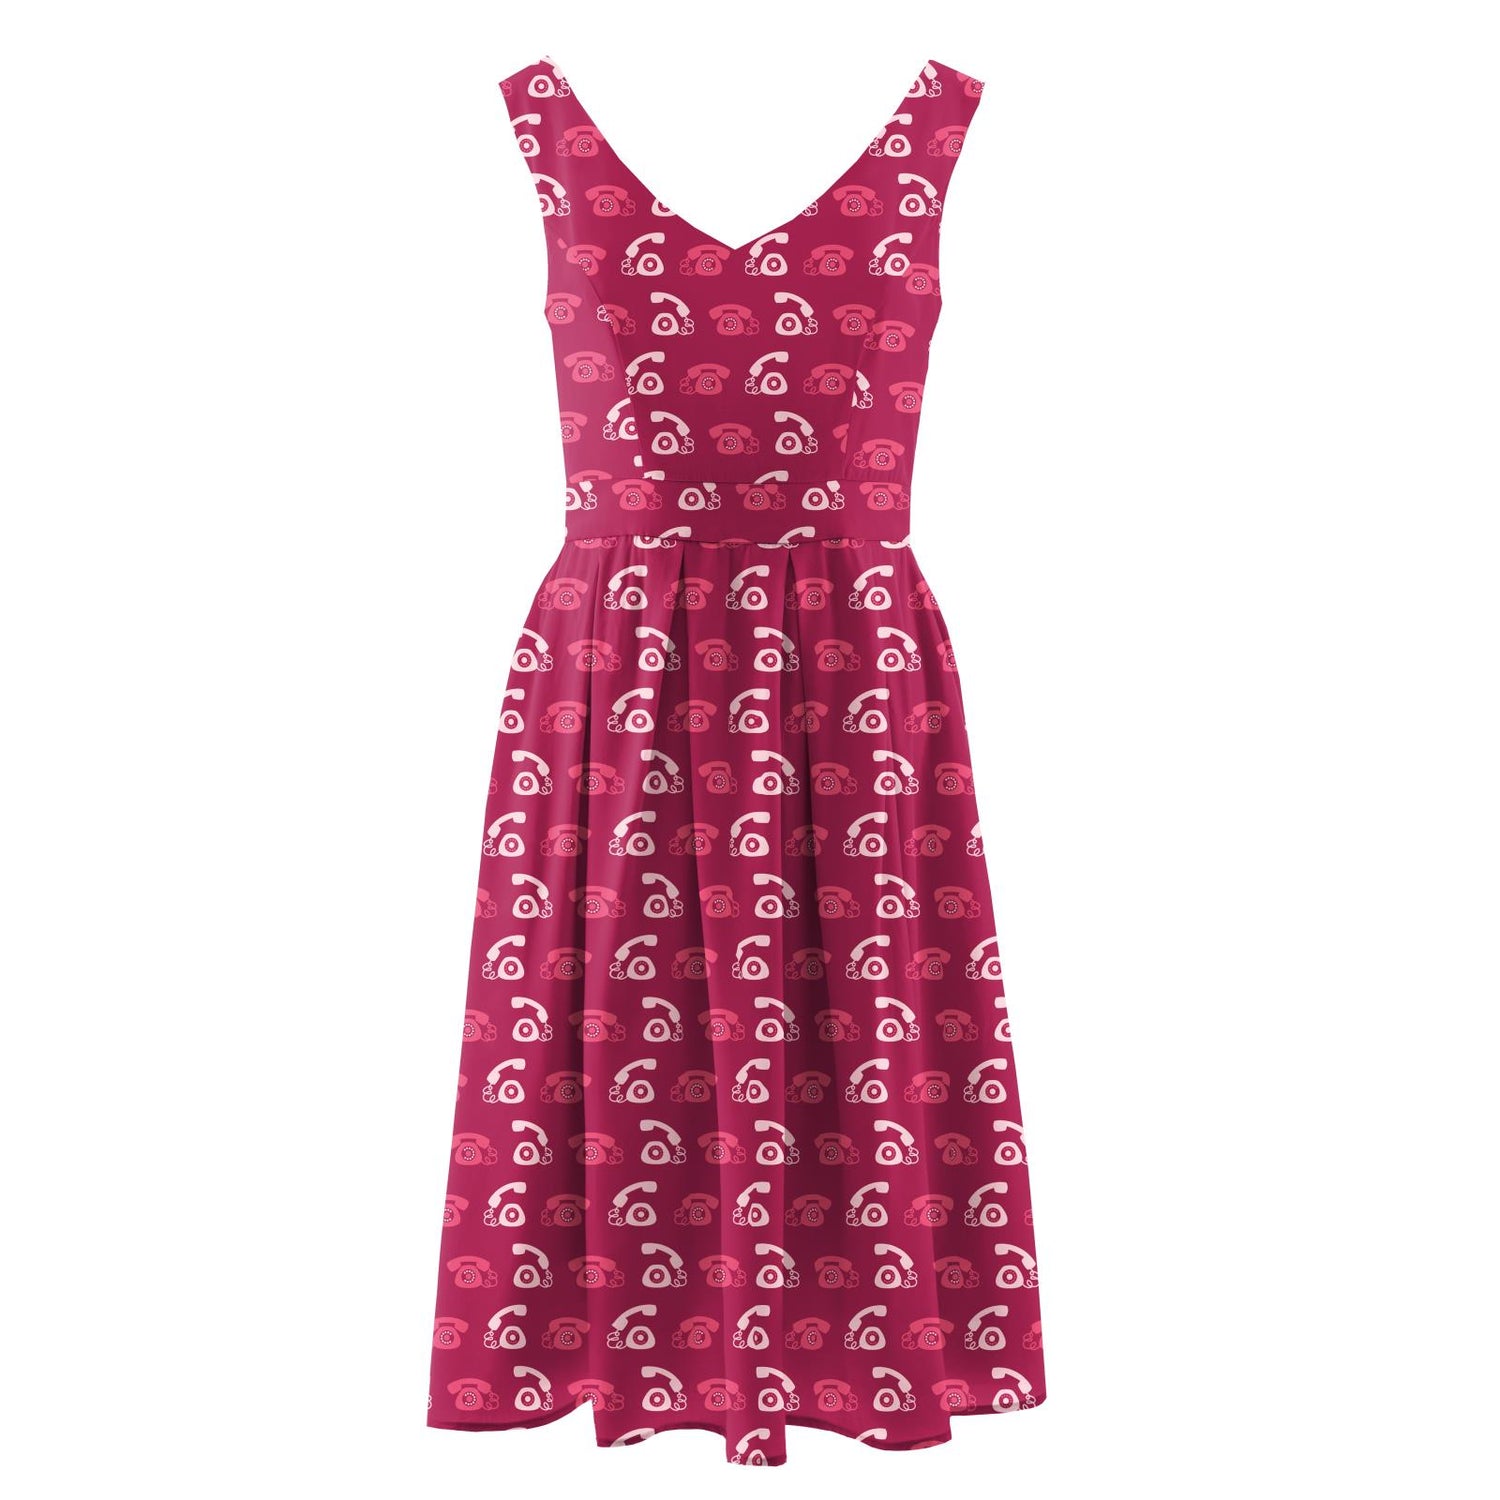 Women's Print Woven Dress in Berry Telephone